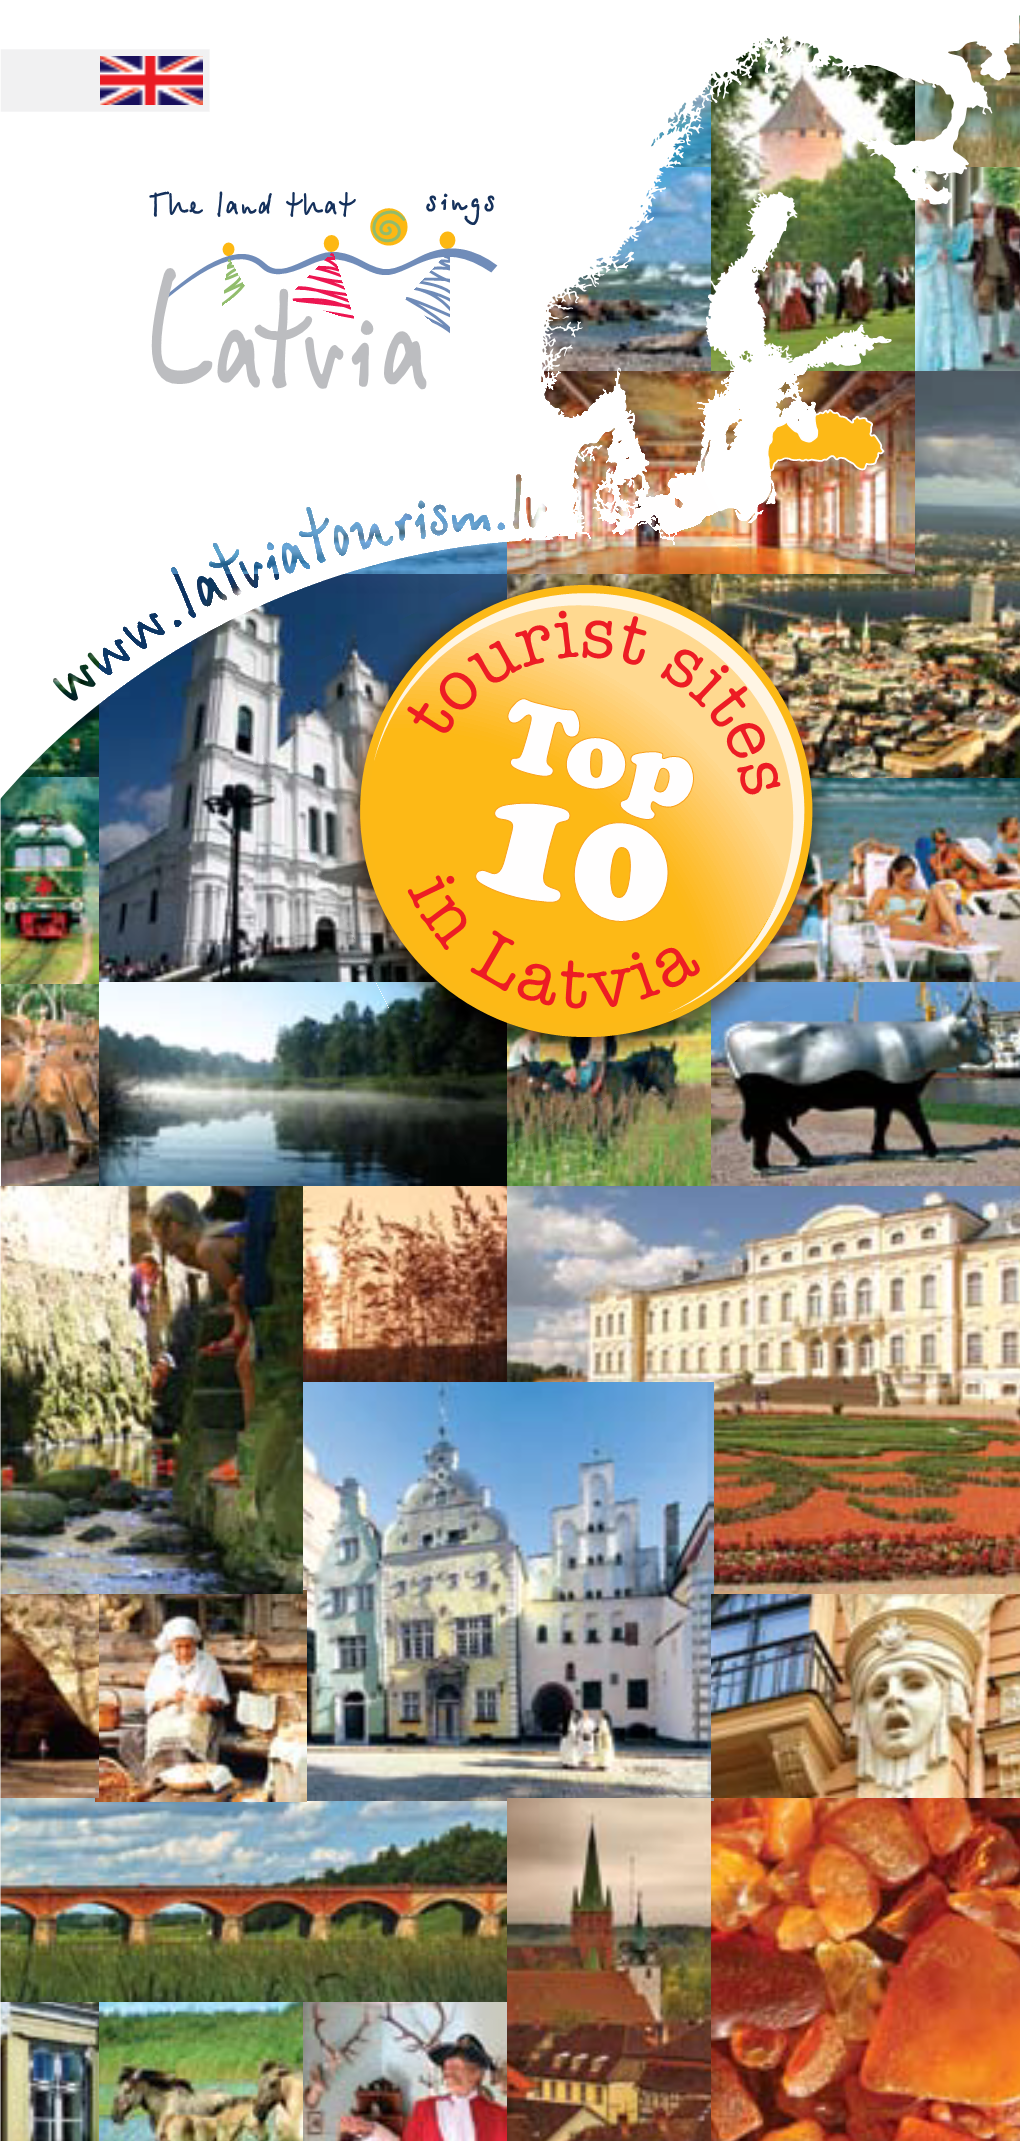 Top 10 Tourist Sites in Latvia • Top 10 Tourist Sites in Latvia • Top 10 Tourist Sites in Latvia